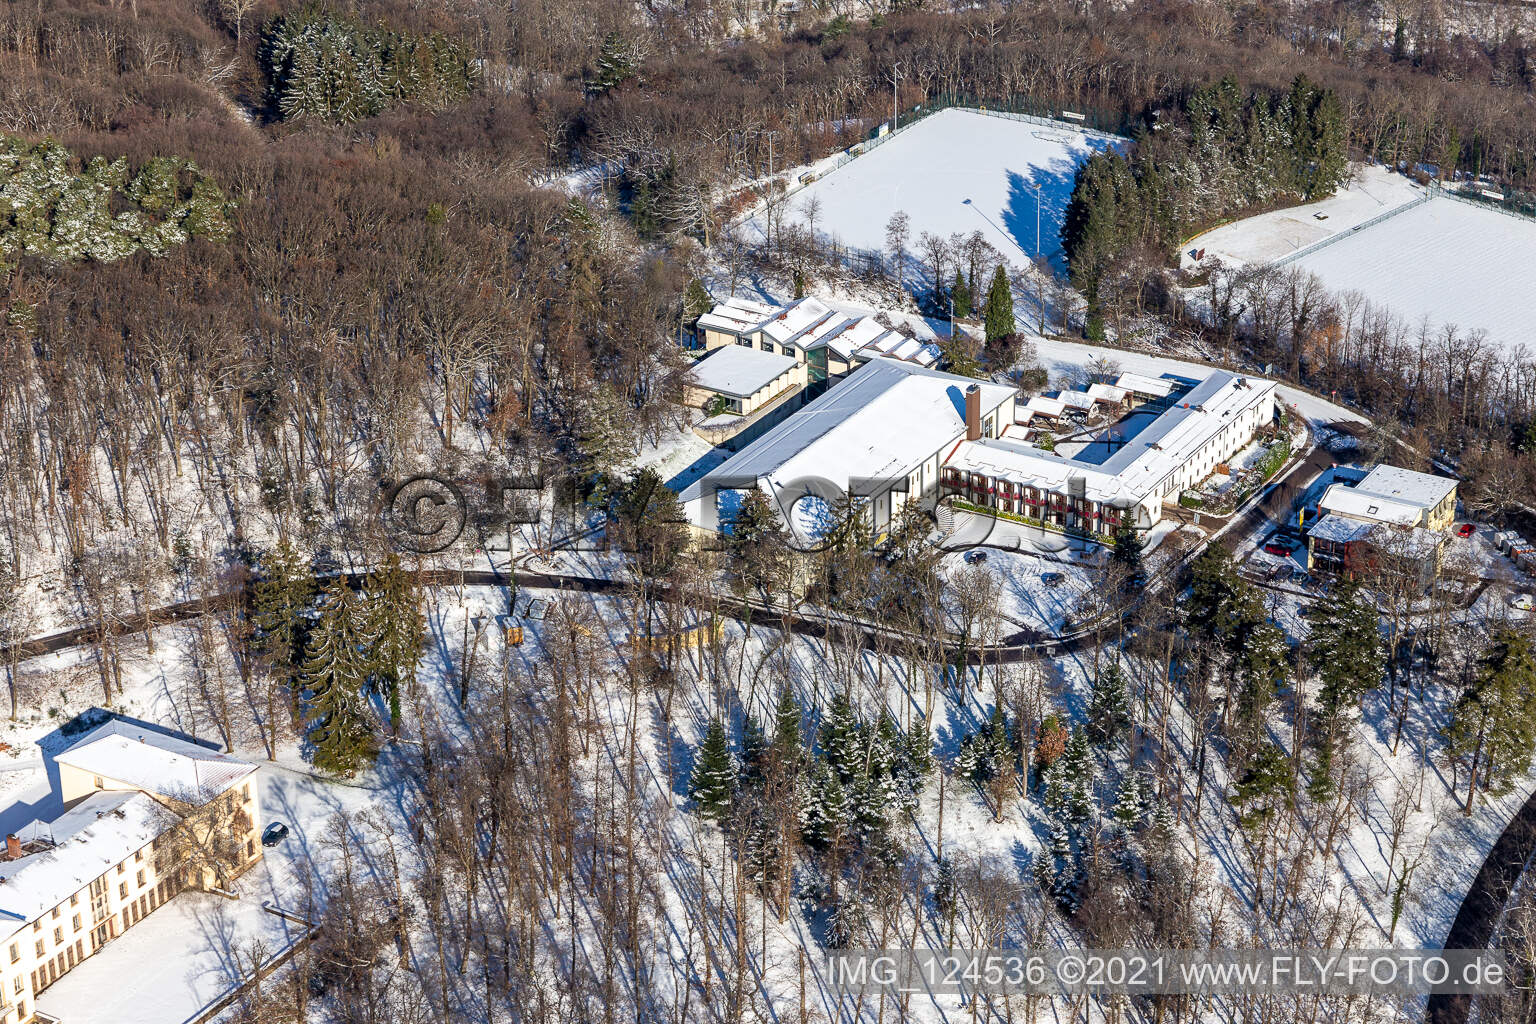 Aerial view of Winter aerial view in the snow of the sports school Edenkoben in Edenkoben in the state Rhineland-Palatinate, Germany